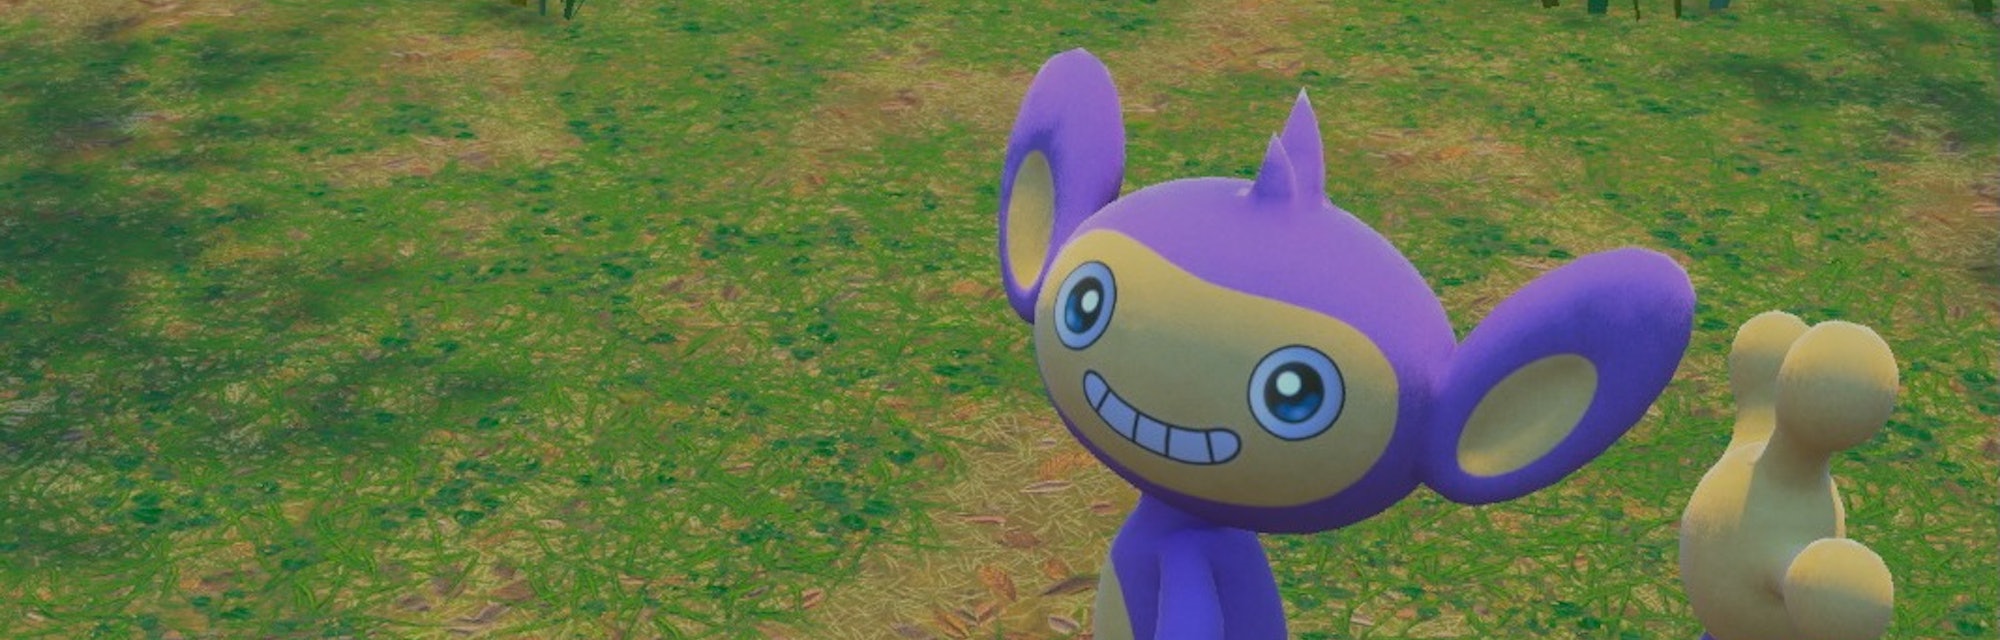 A Pokémon smiling